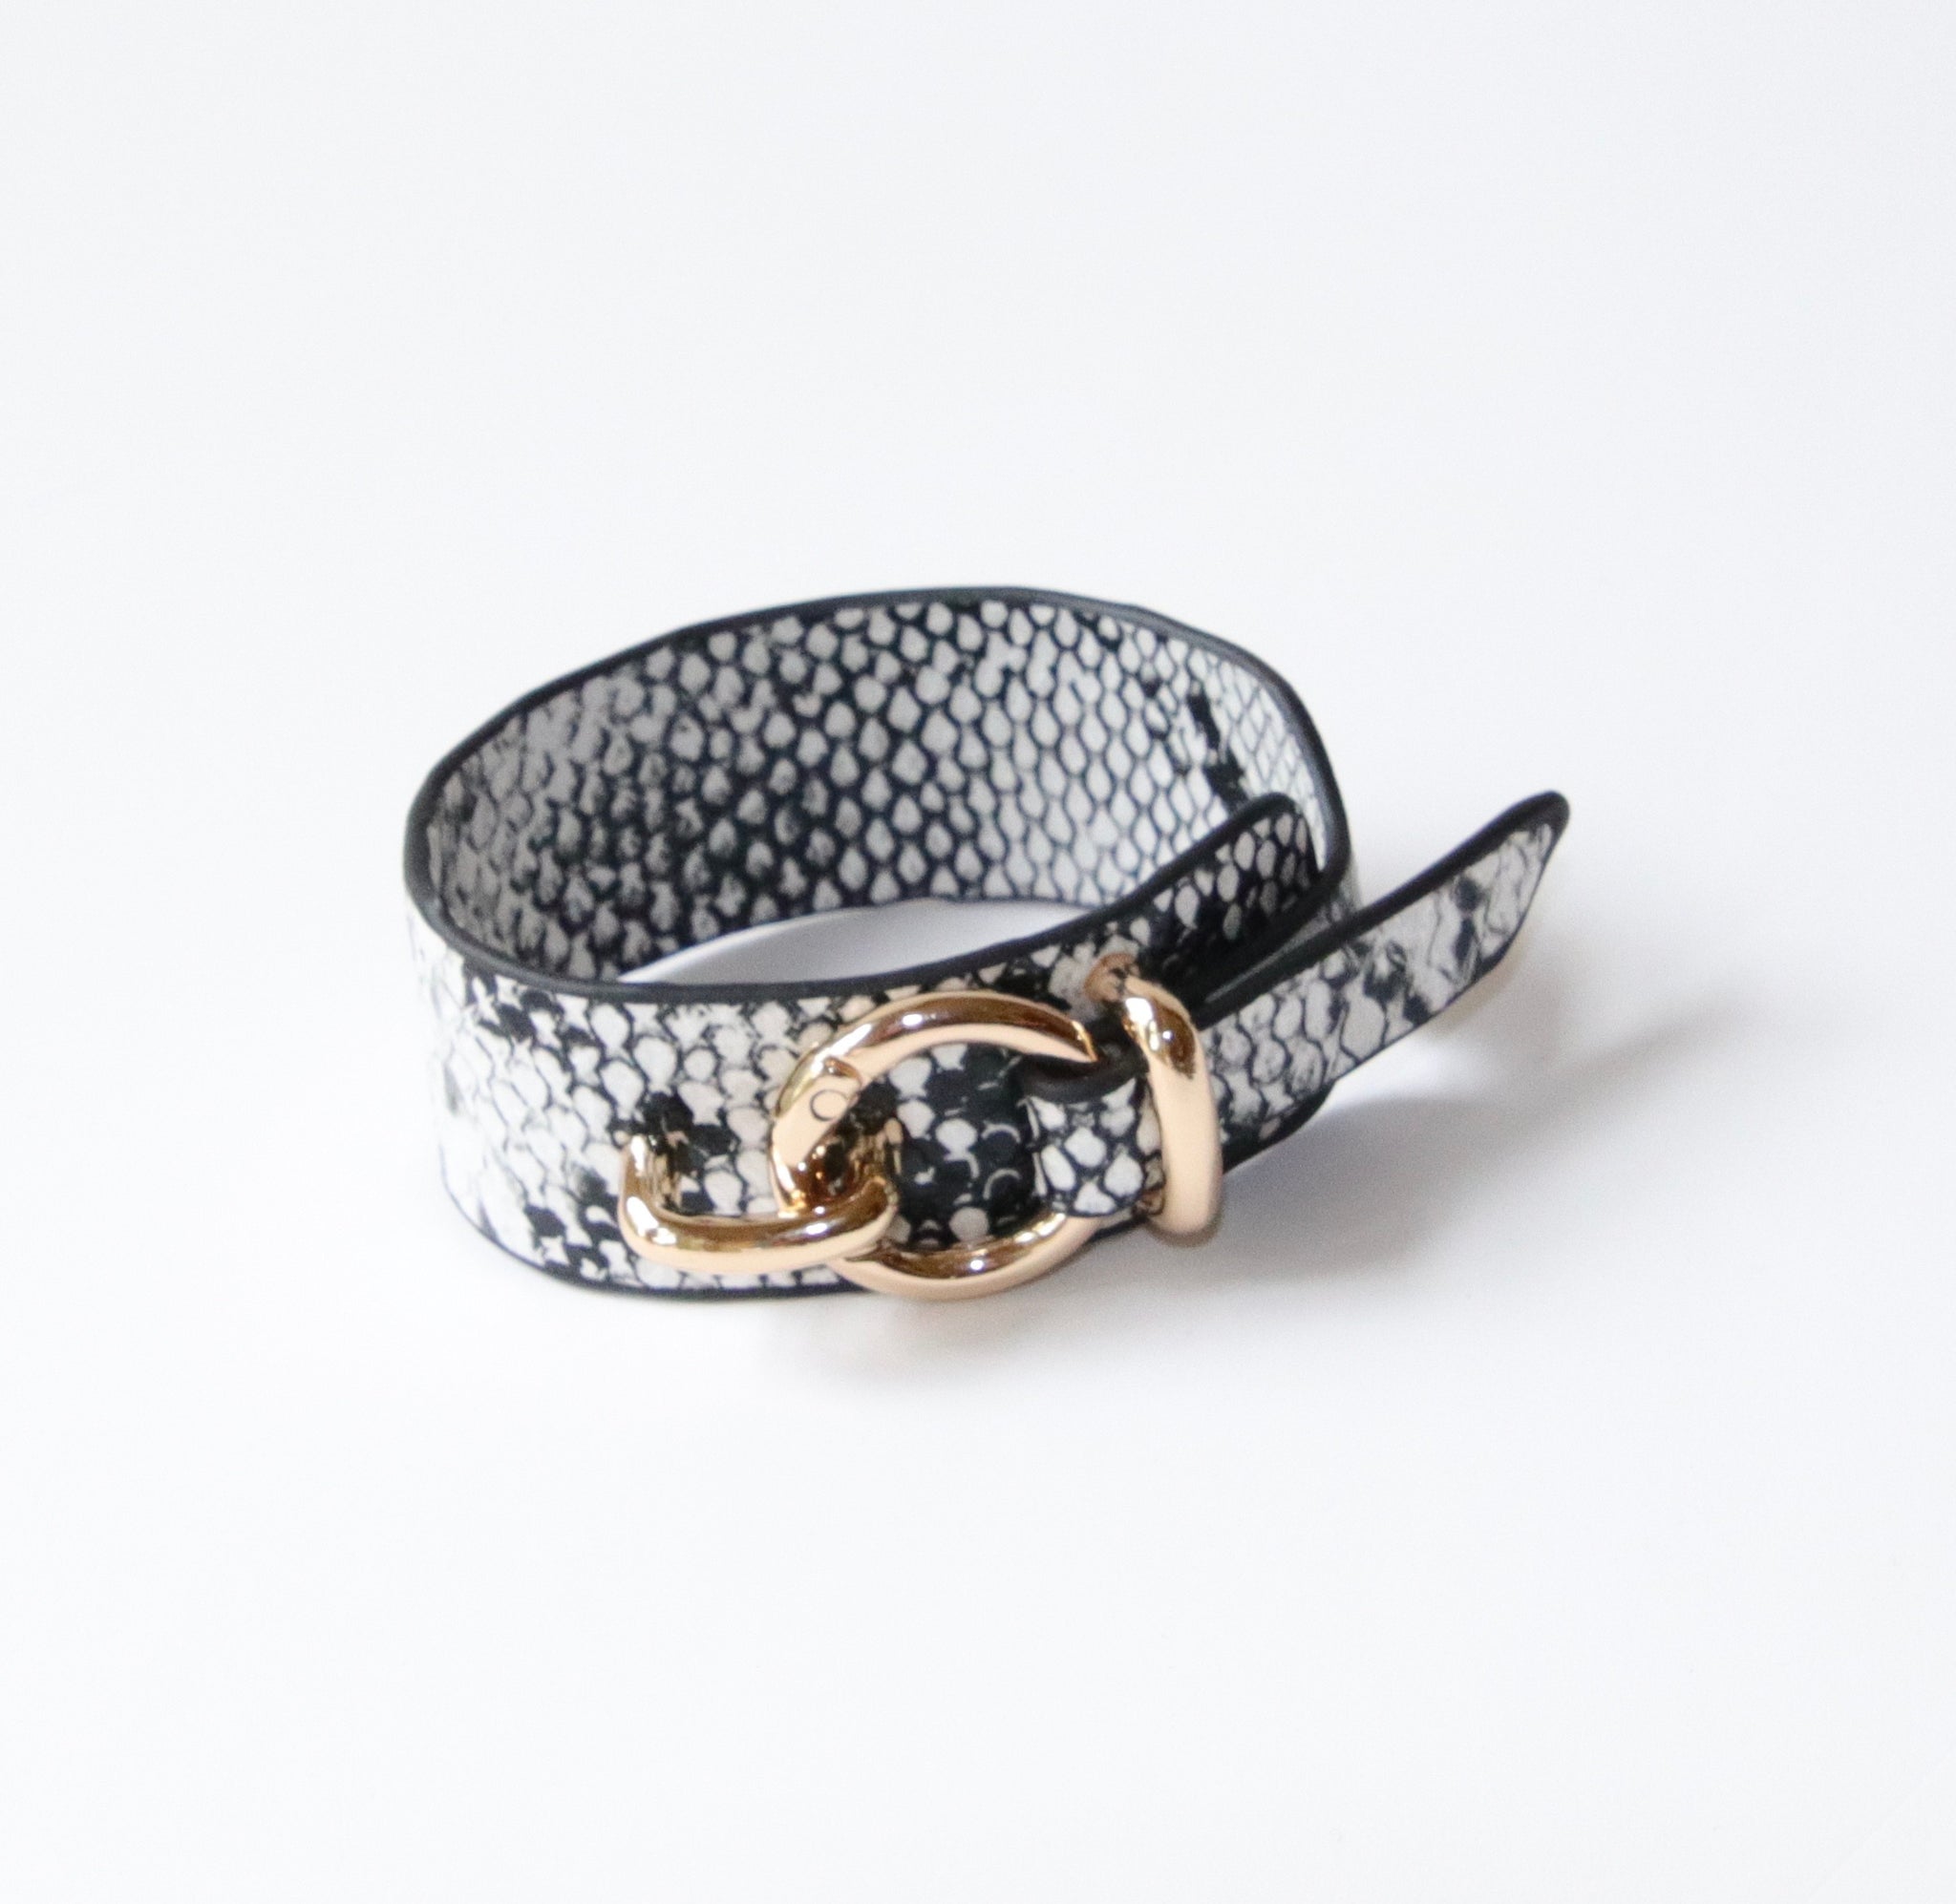 Leopard Leather Bracelet (Black/White)